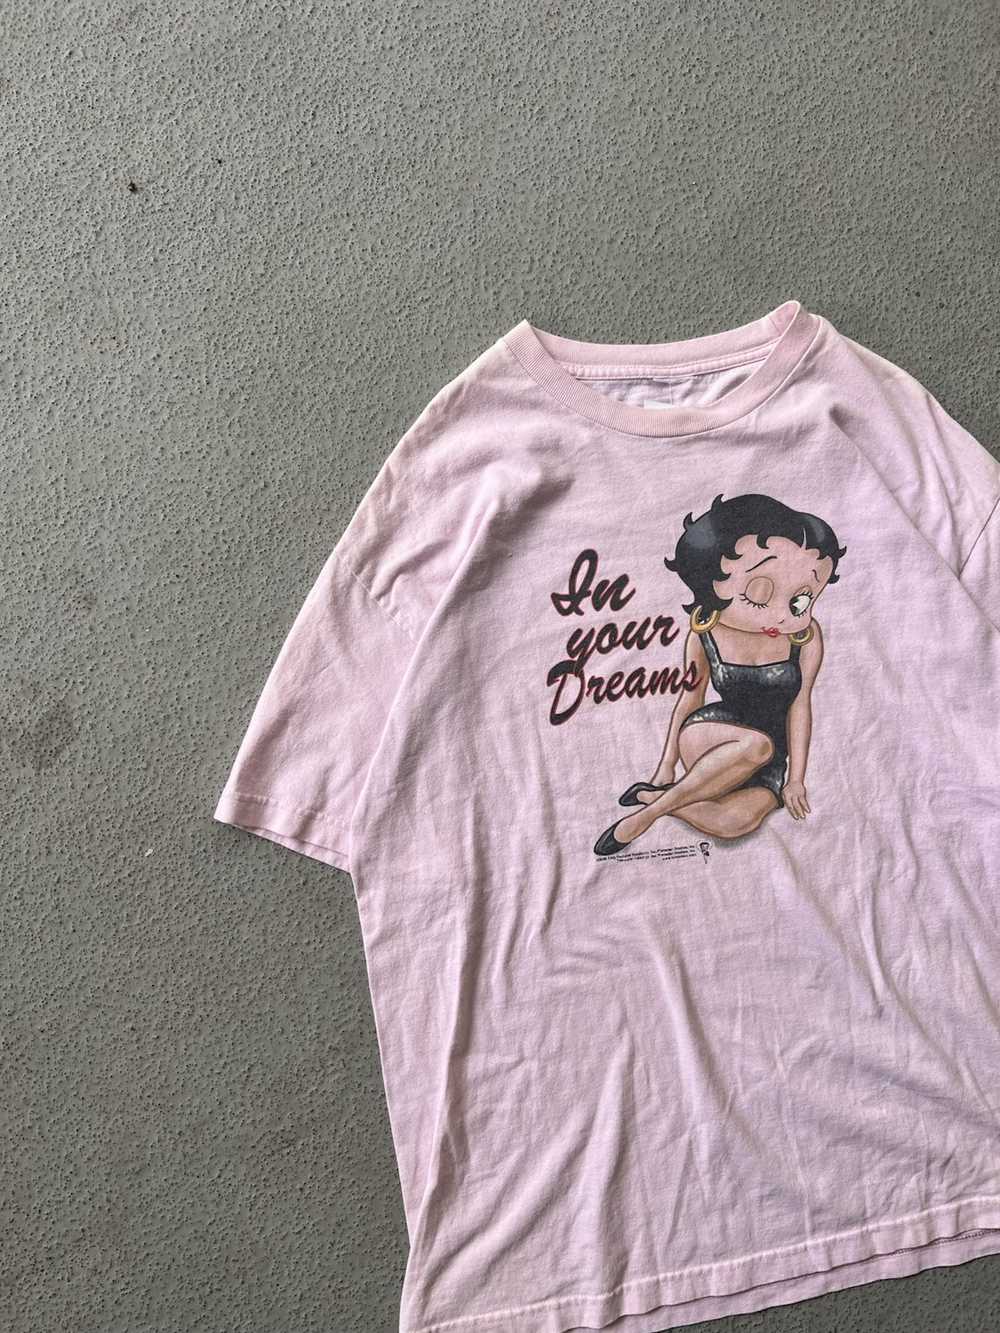 Vintage Vintage Betty Boop Shirt - image 2